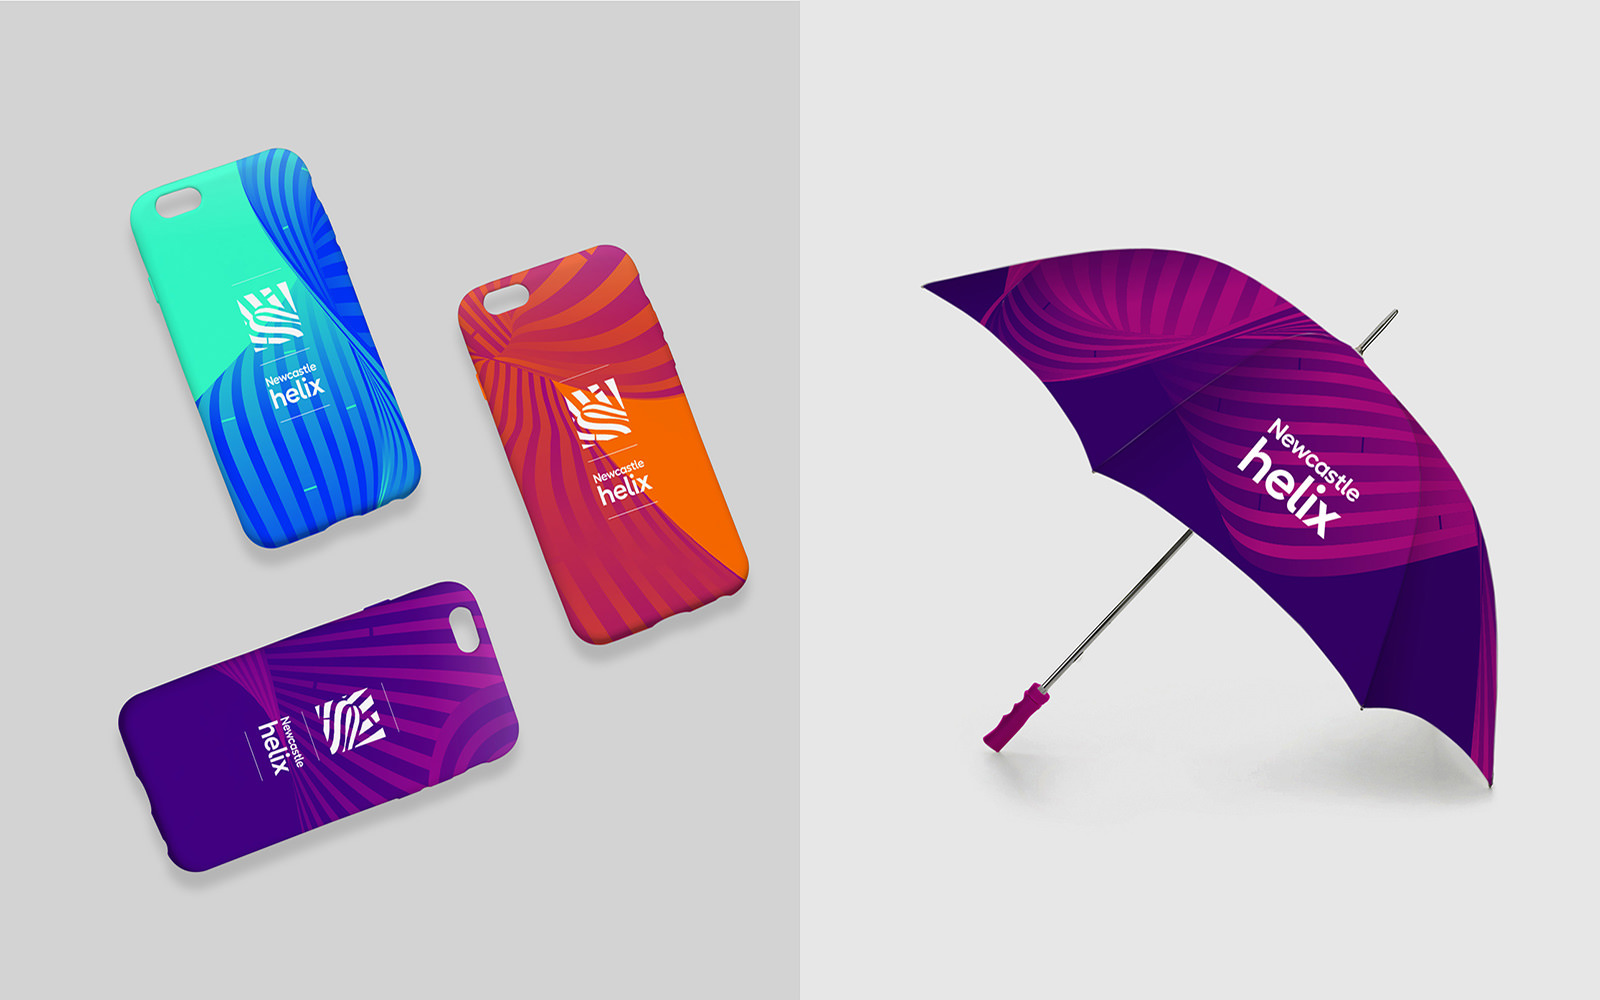 newcastle-helix-cases-umbrella